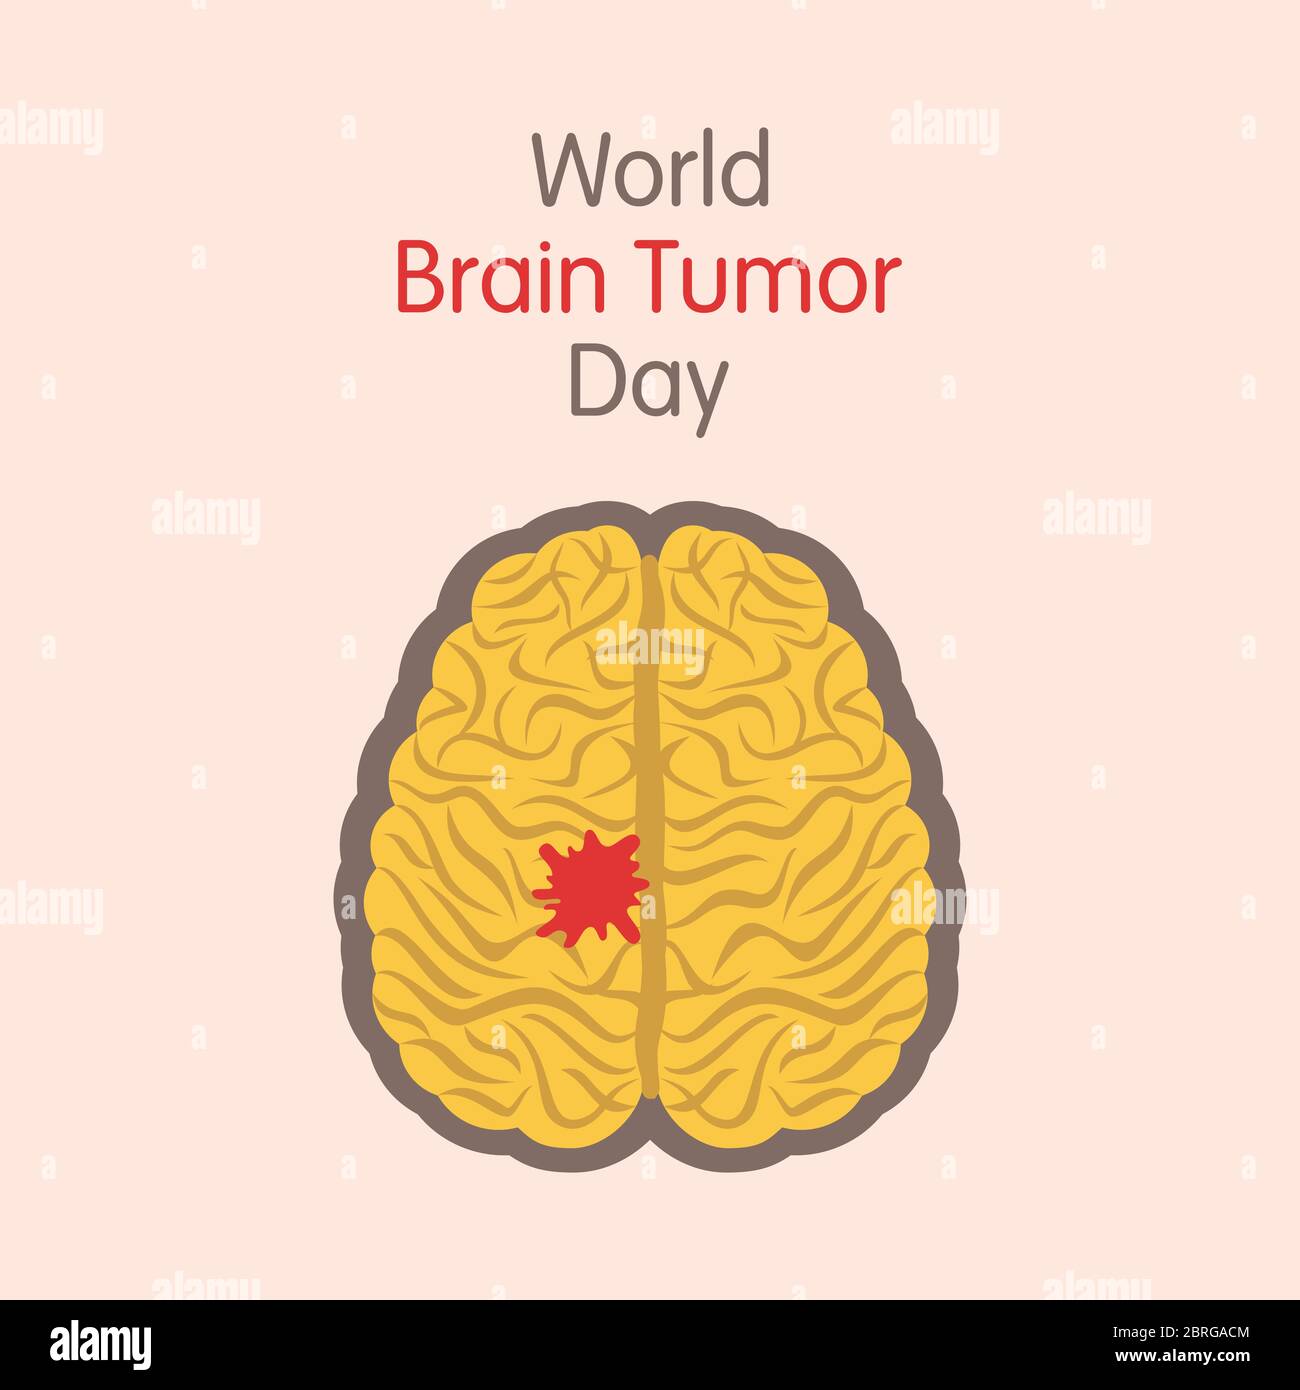 World Brain Tumor Day Vector Illustration Use For Greeting Card